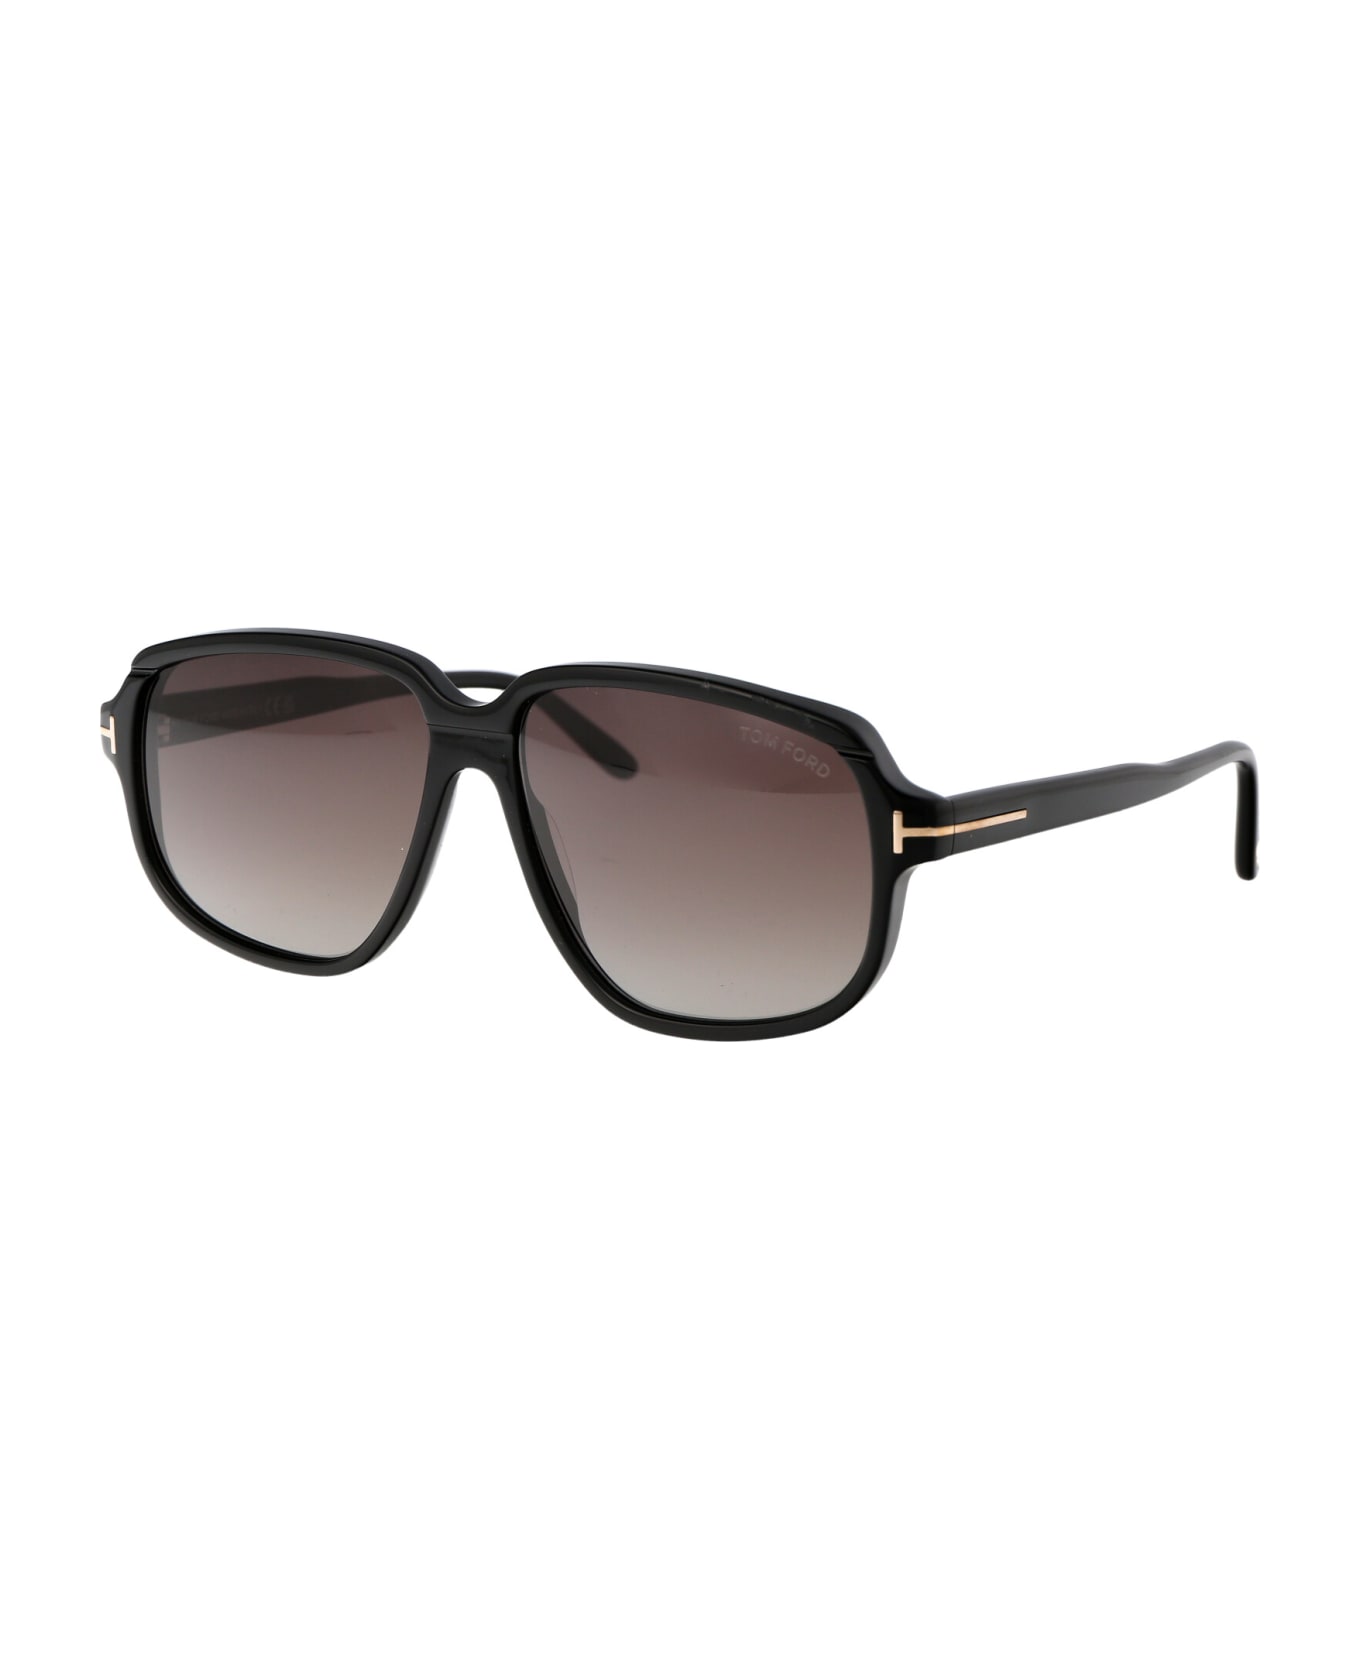 Tom Ford Eyewear Anton Sunglasses - 01B Nero Lucido / Fumo Grad